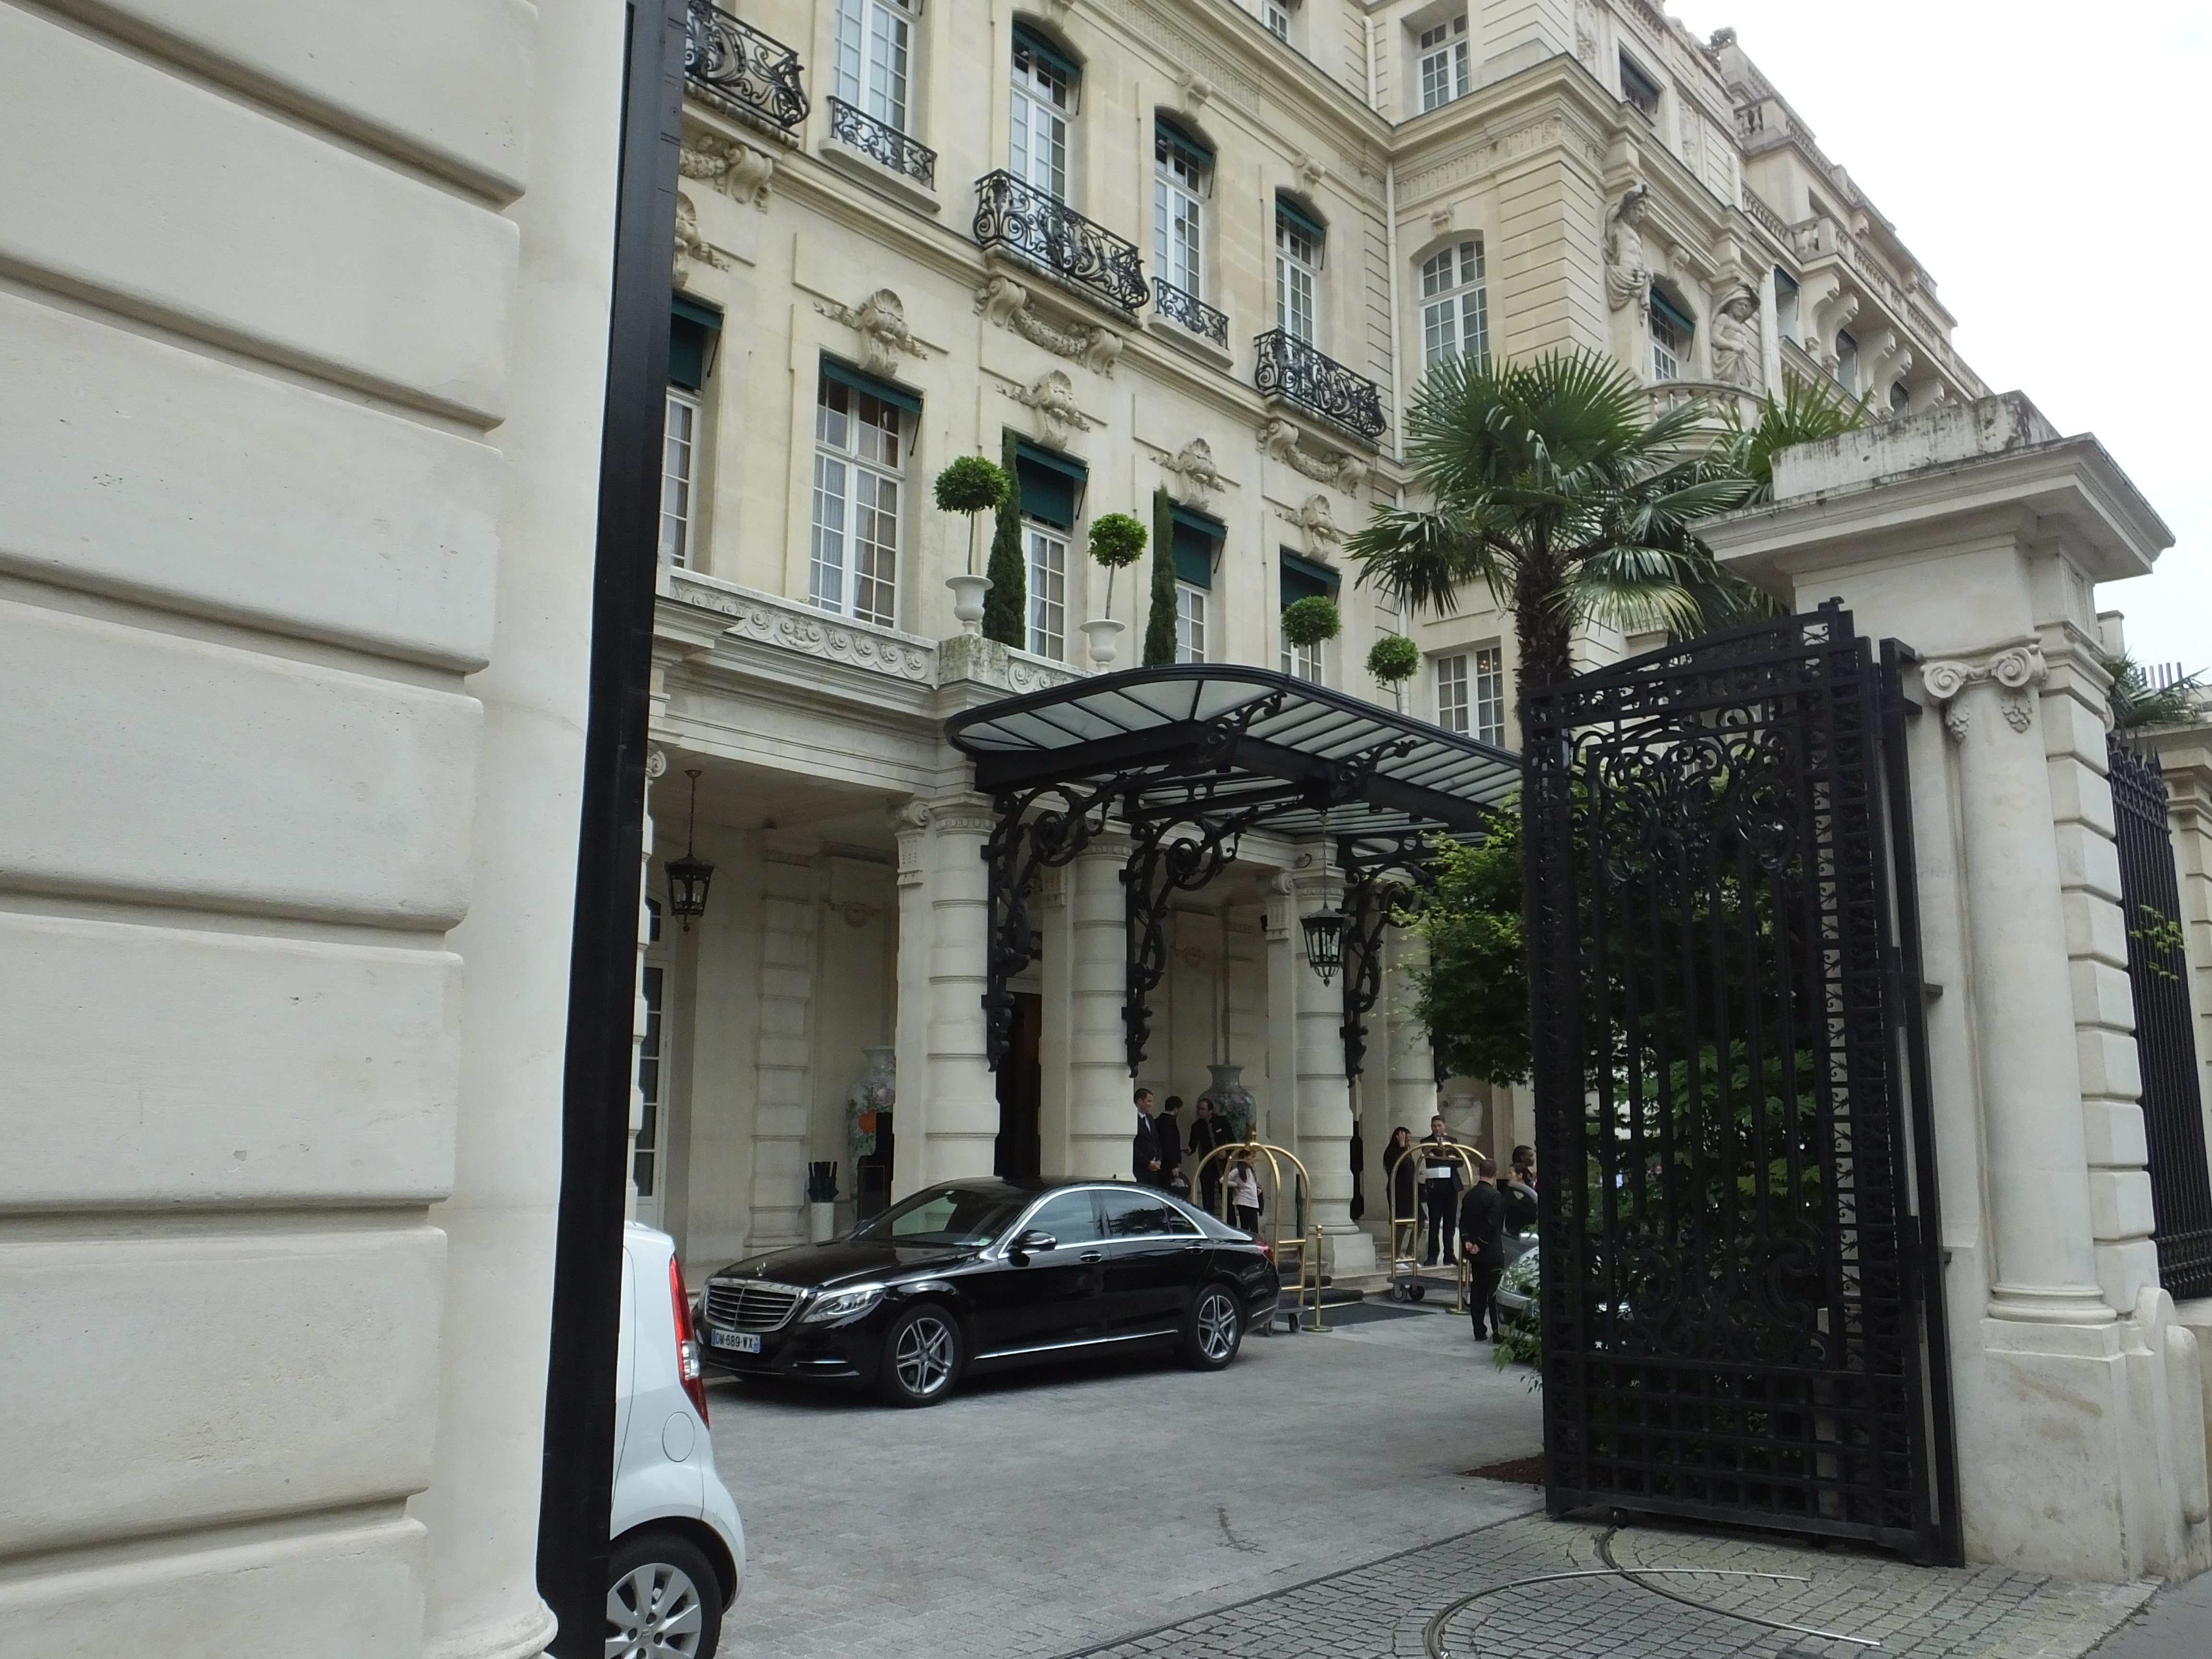 The entrance to the Shangri La Hotel on Avenue Woodrow Wilson